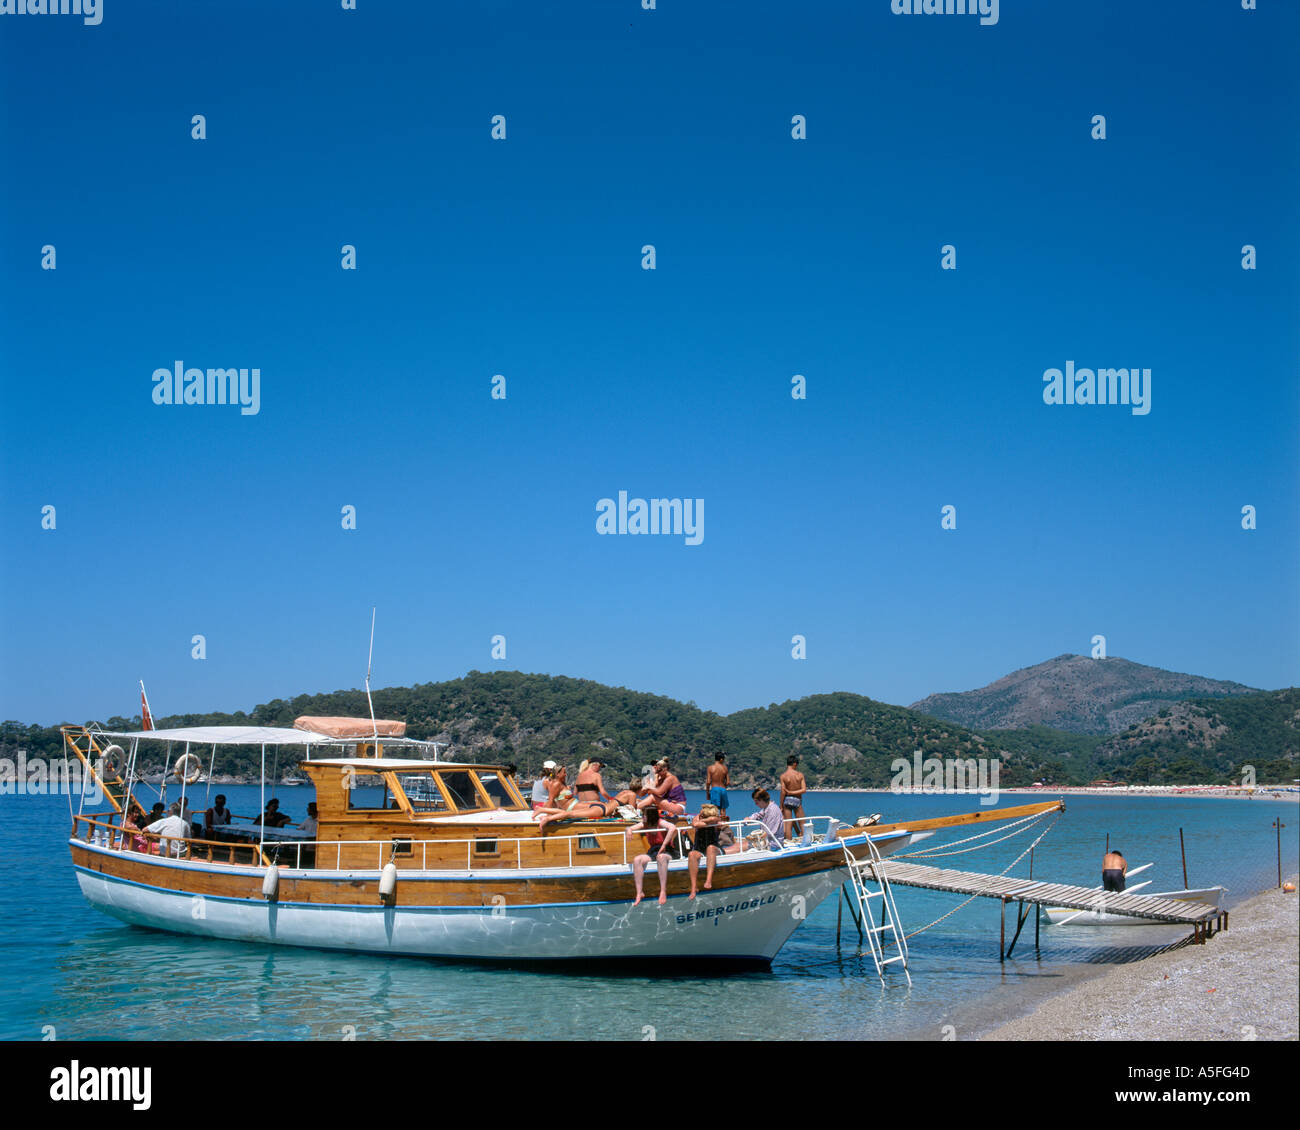 Excursion boat on the beach at Olu Deniz, Fethiye, Turkey Stock Photo